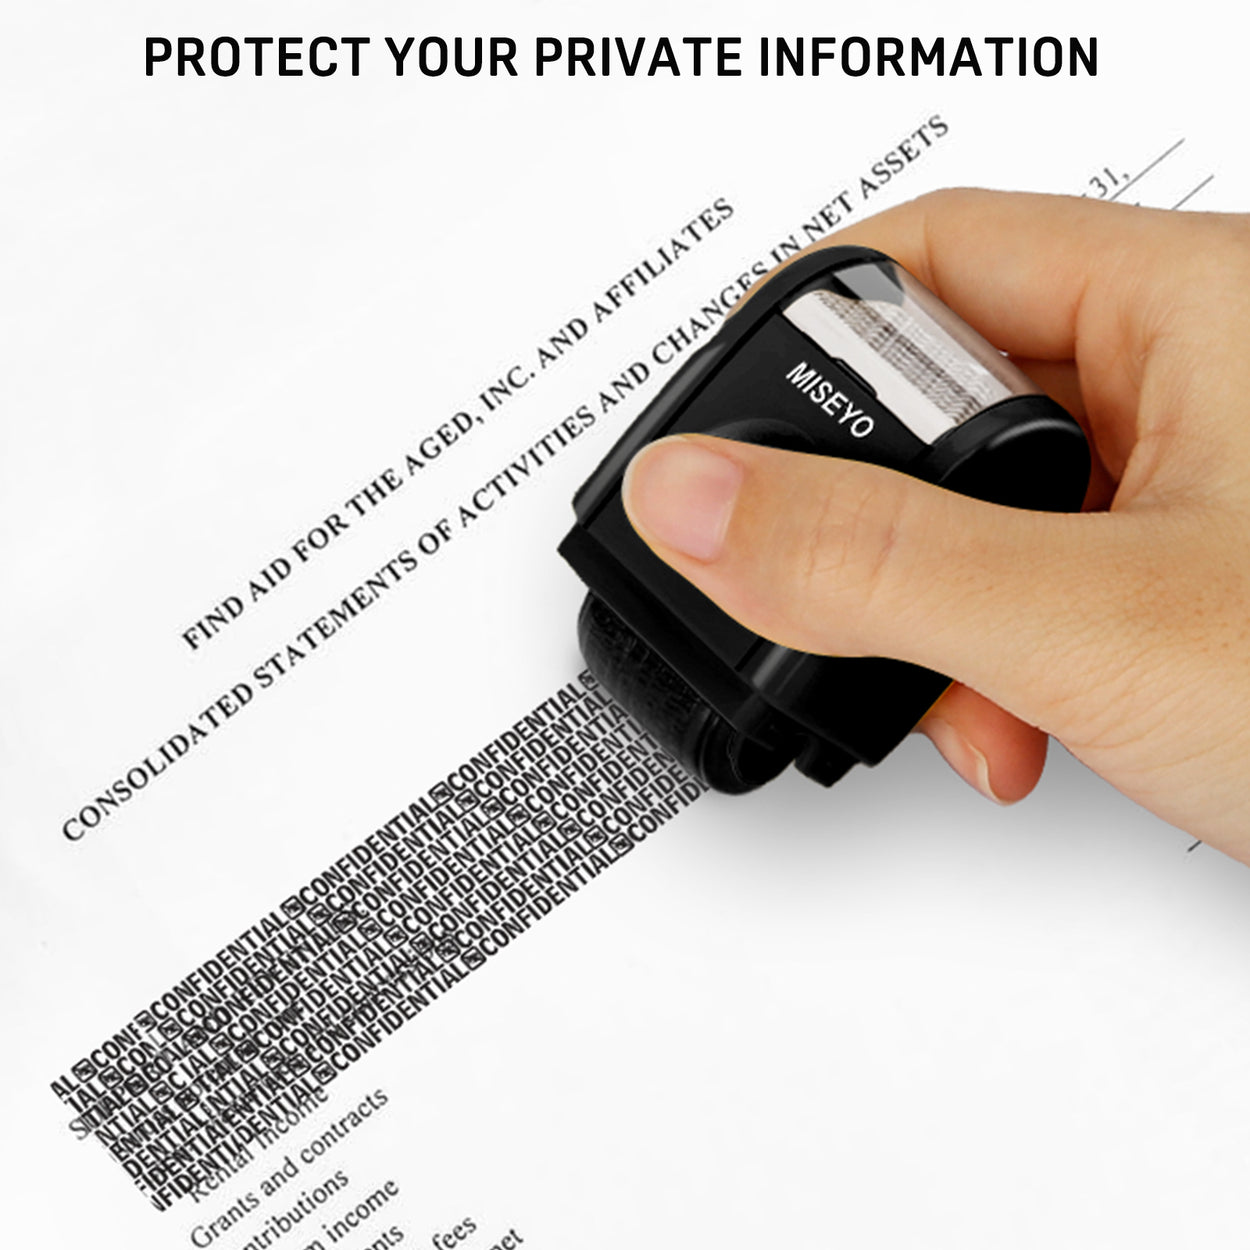 Miseyo Mini Identity Theft Protection Roller Stamp - Black